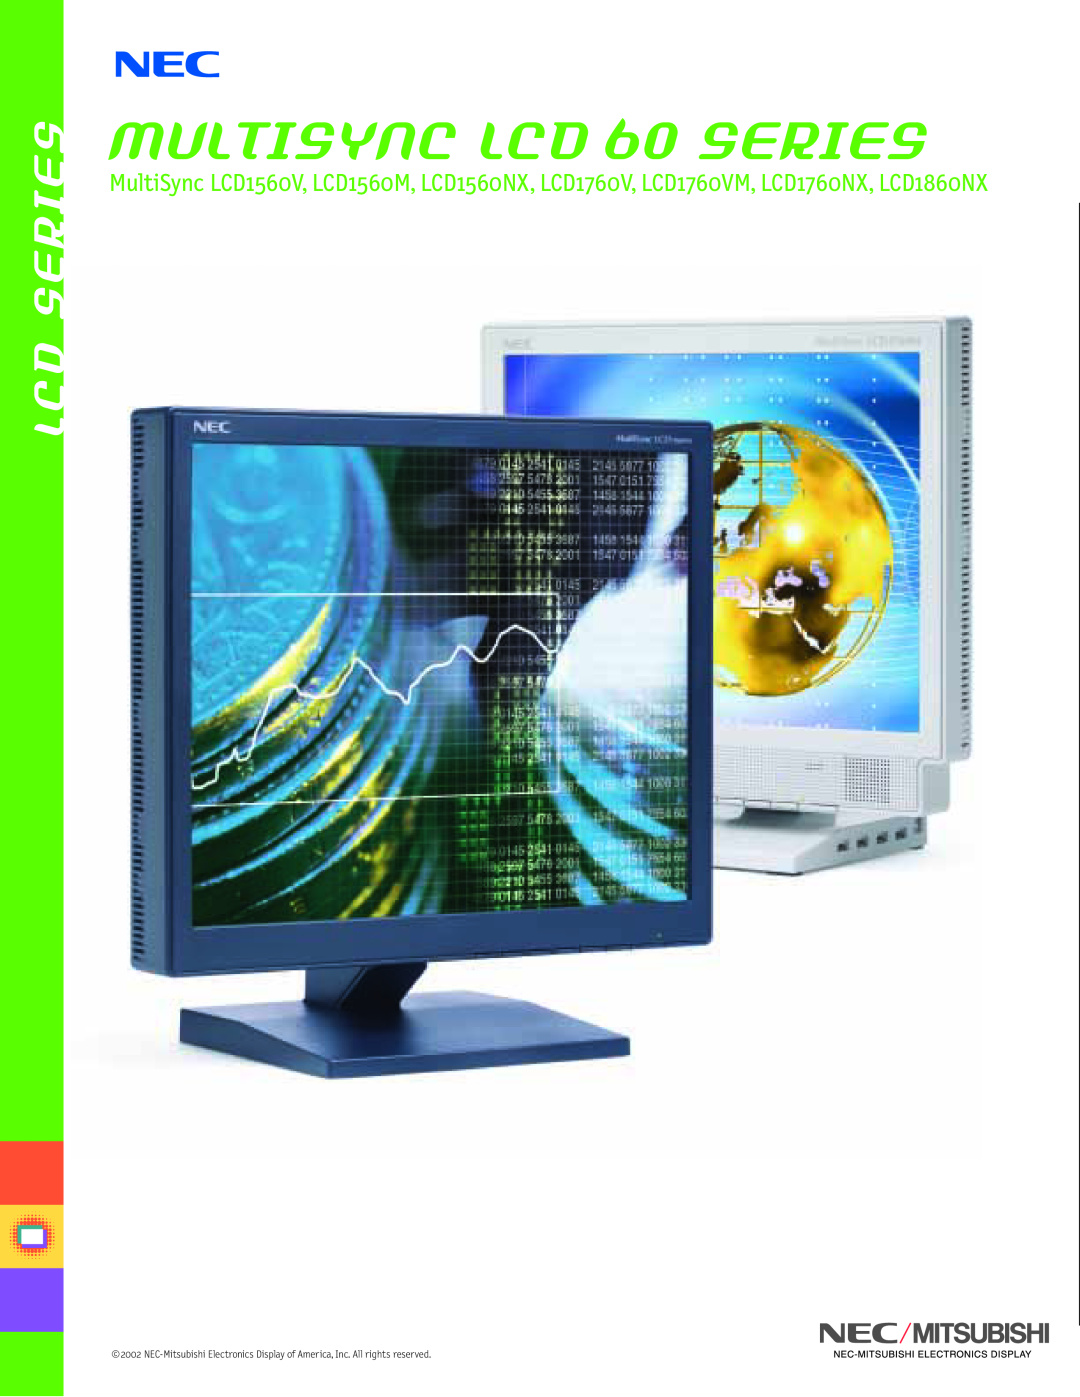 NEC LCD1560V manual MultiSync LCD 60 Series, LCD series 